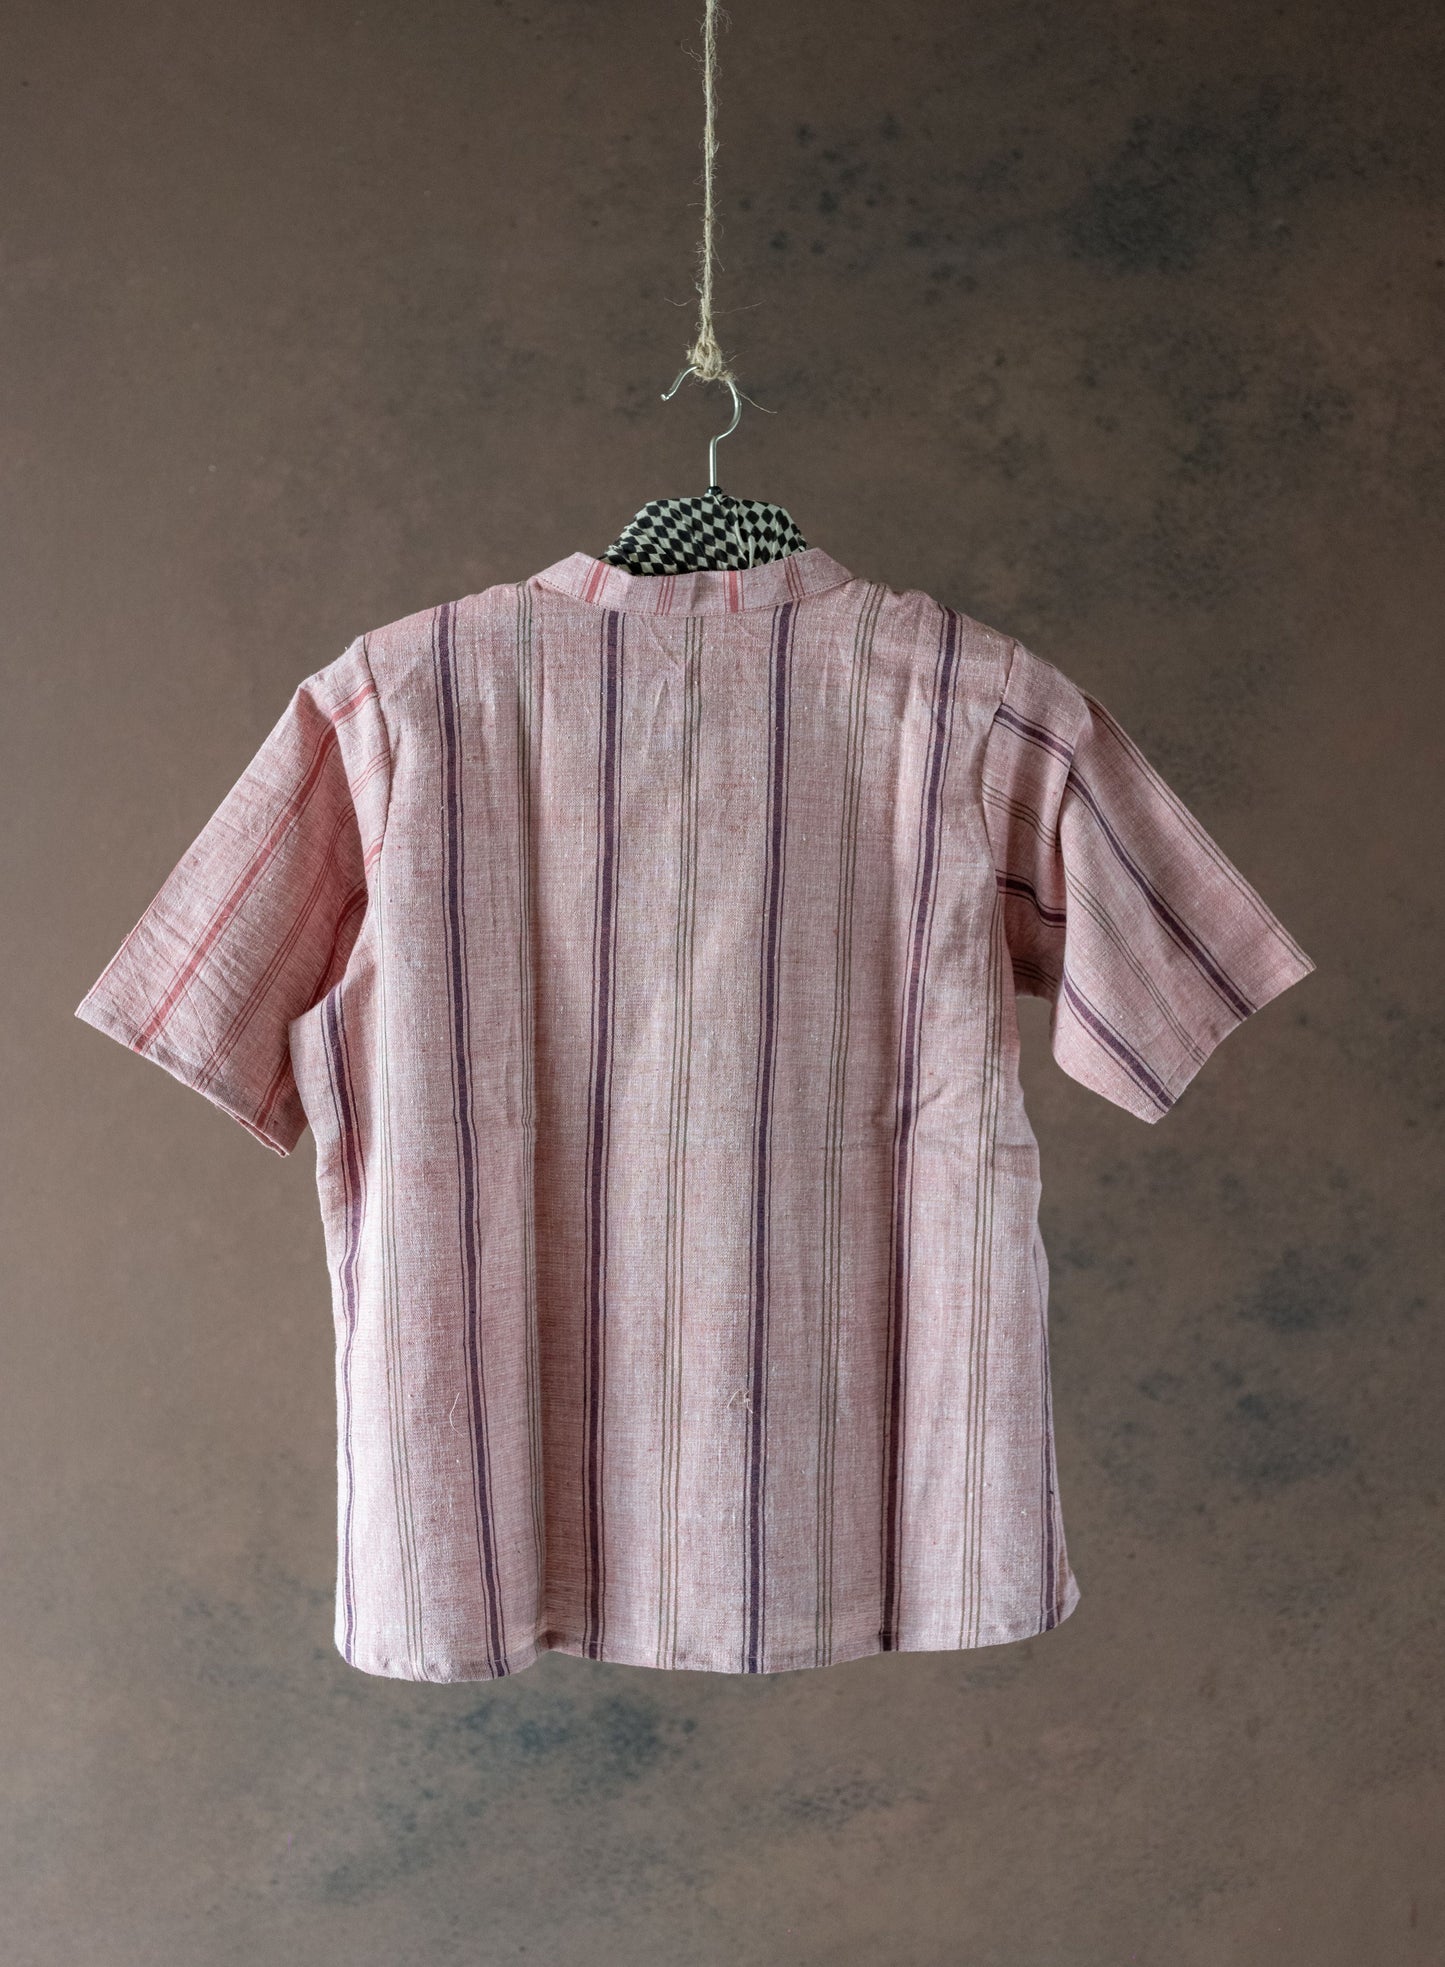 Stripes handwoven organic cotton shirt, Handmade shirt, Yarn dyed pure cotton shirt, Conscious fashion